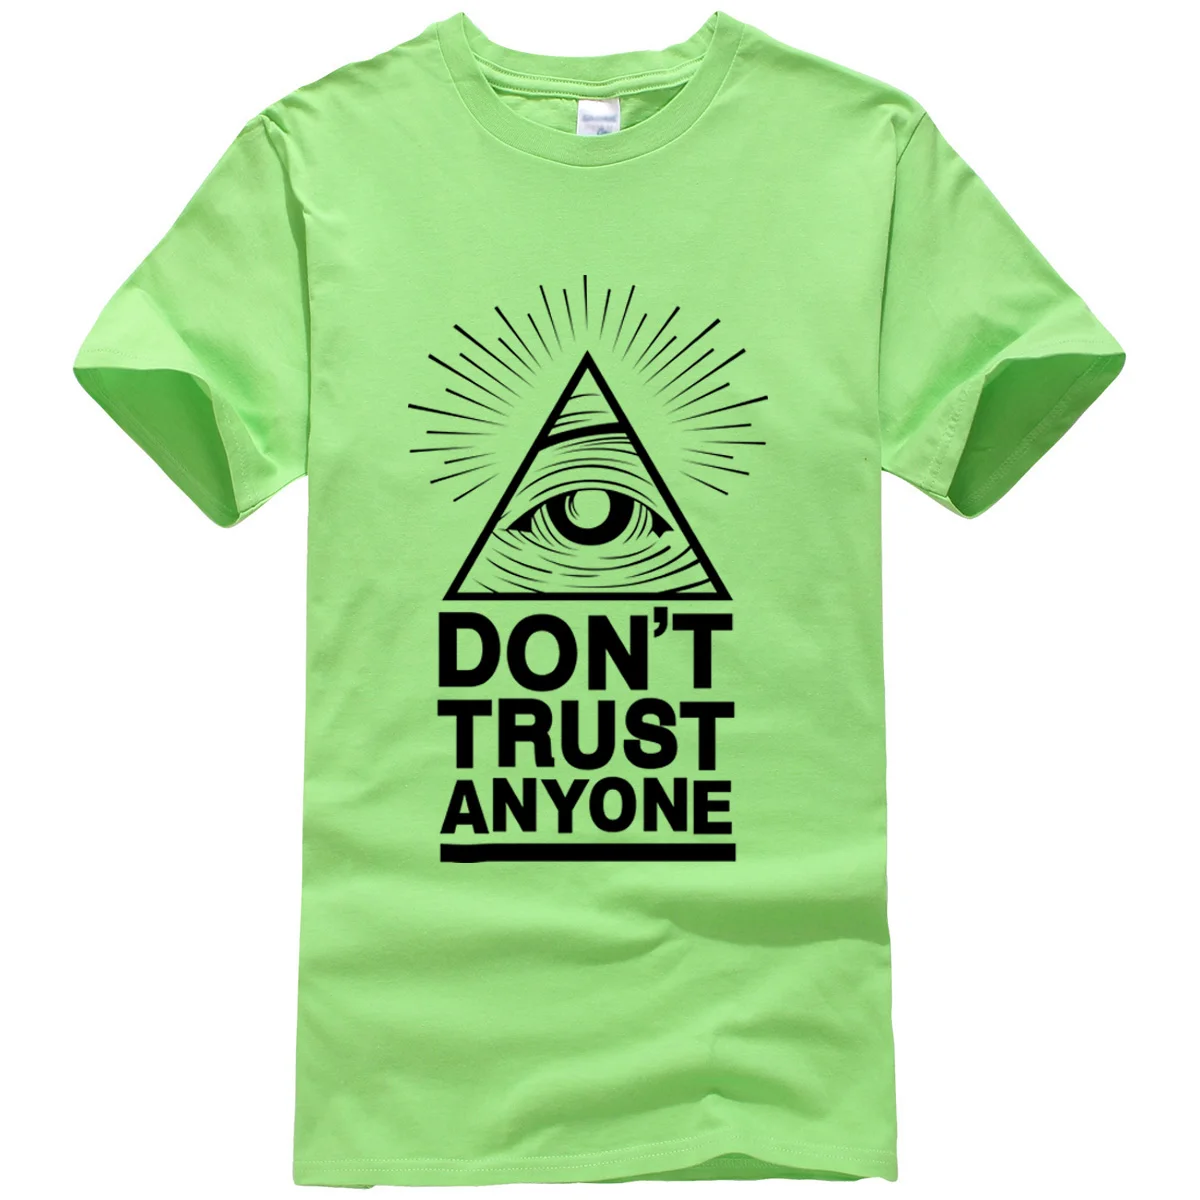 Лето, новинка, мужские футболки, Dont Trust Anyone Illuminati All Seeing Eye, футболка с буквенным принтом, Мужская футболка, повседневные топы, футболки - Цвет: light green1